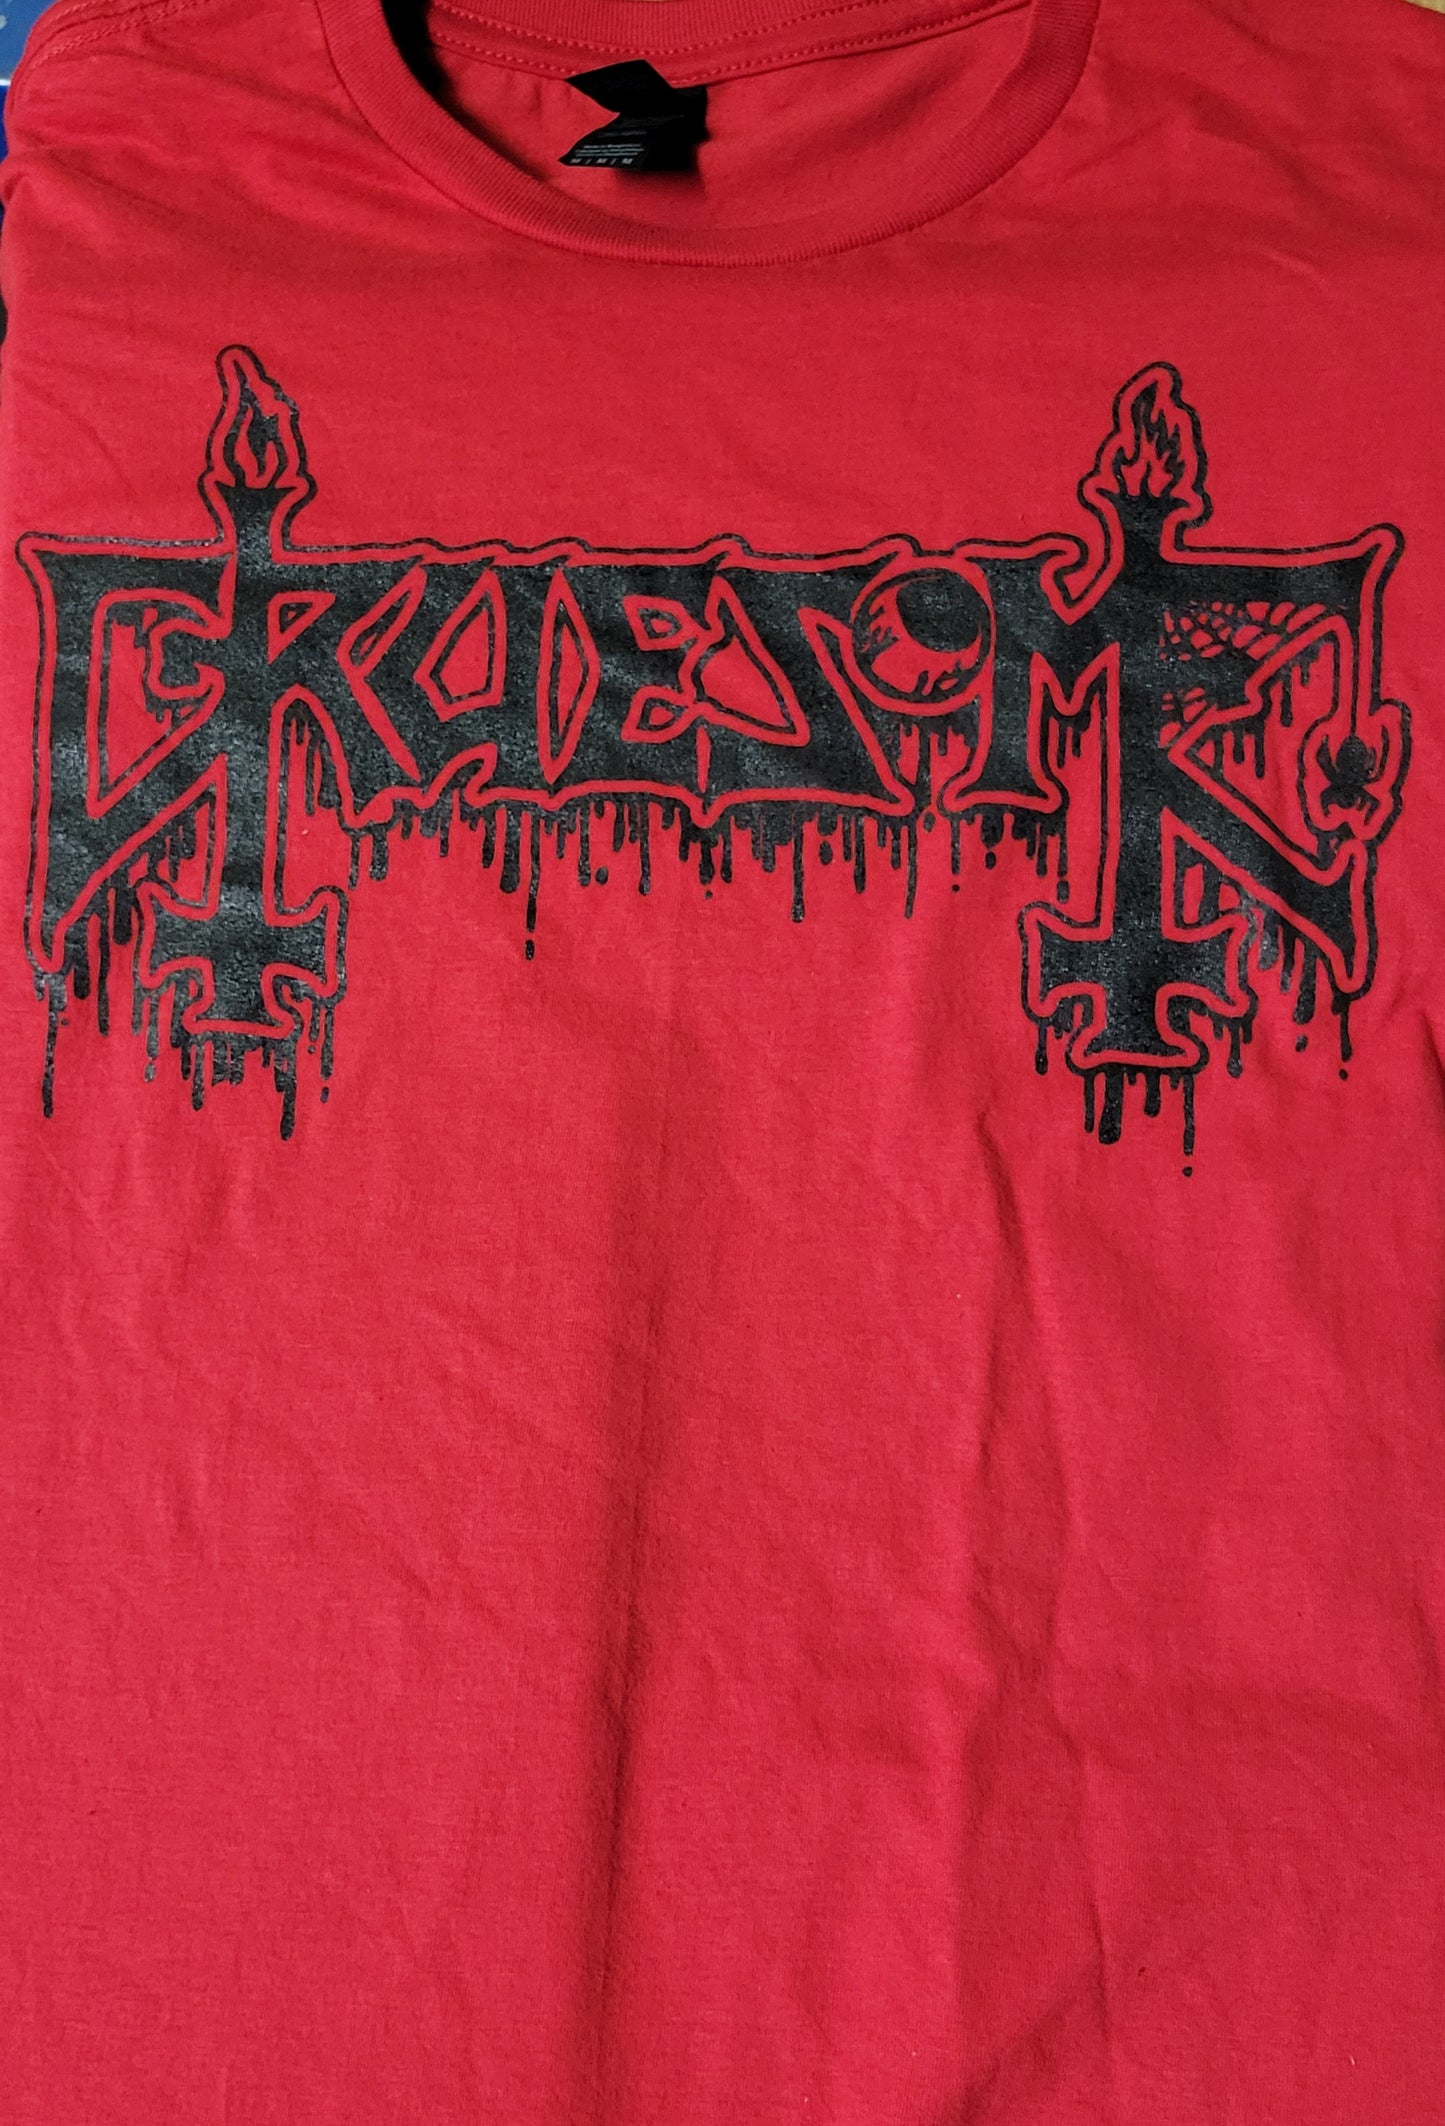 Gruesome Logo T-Shirt